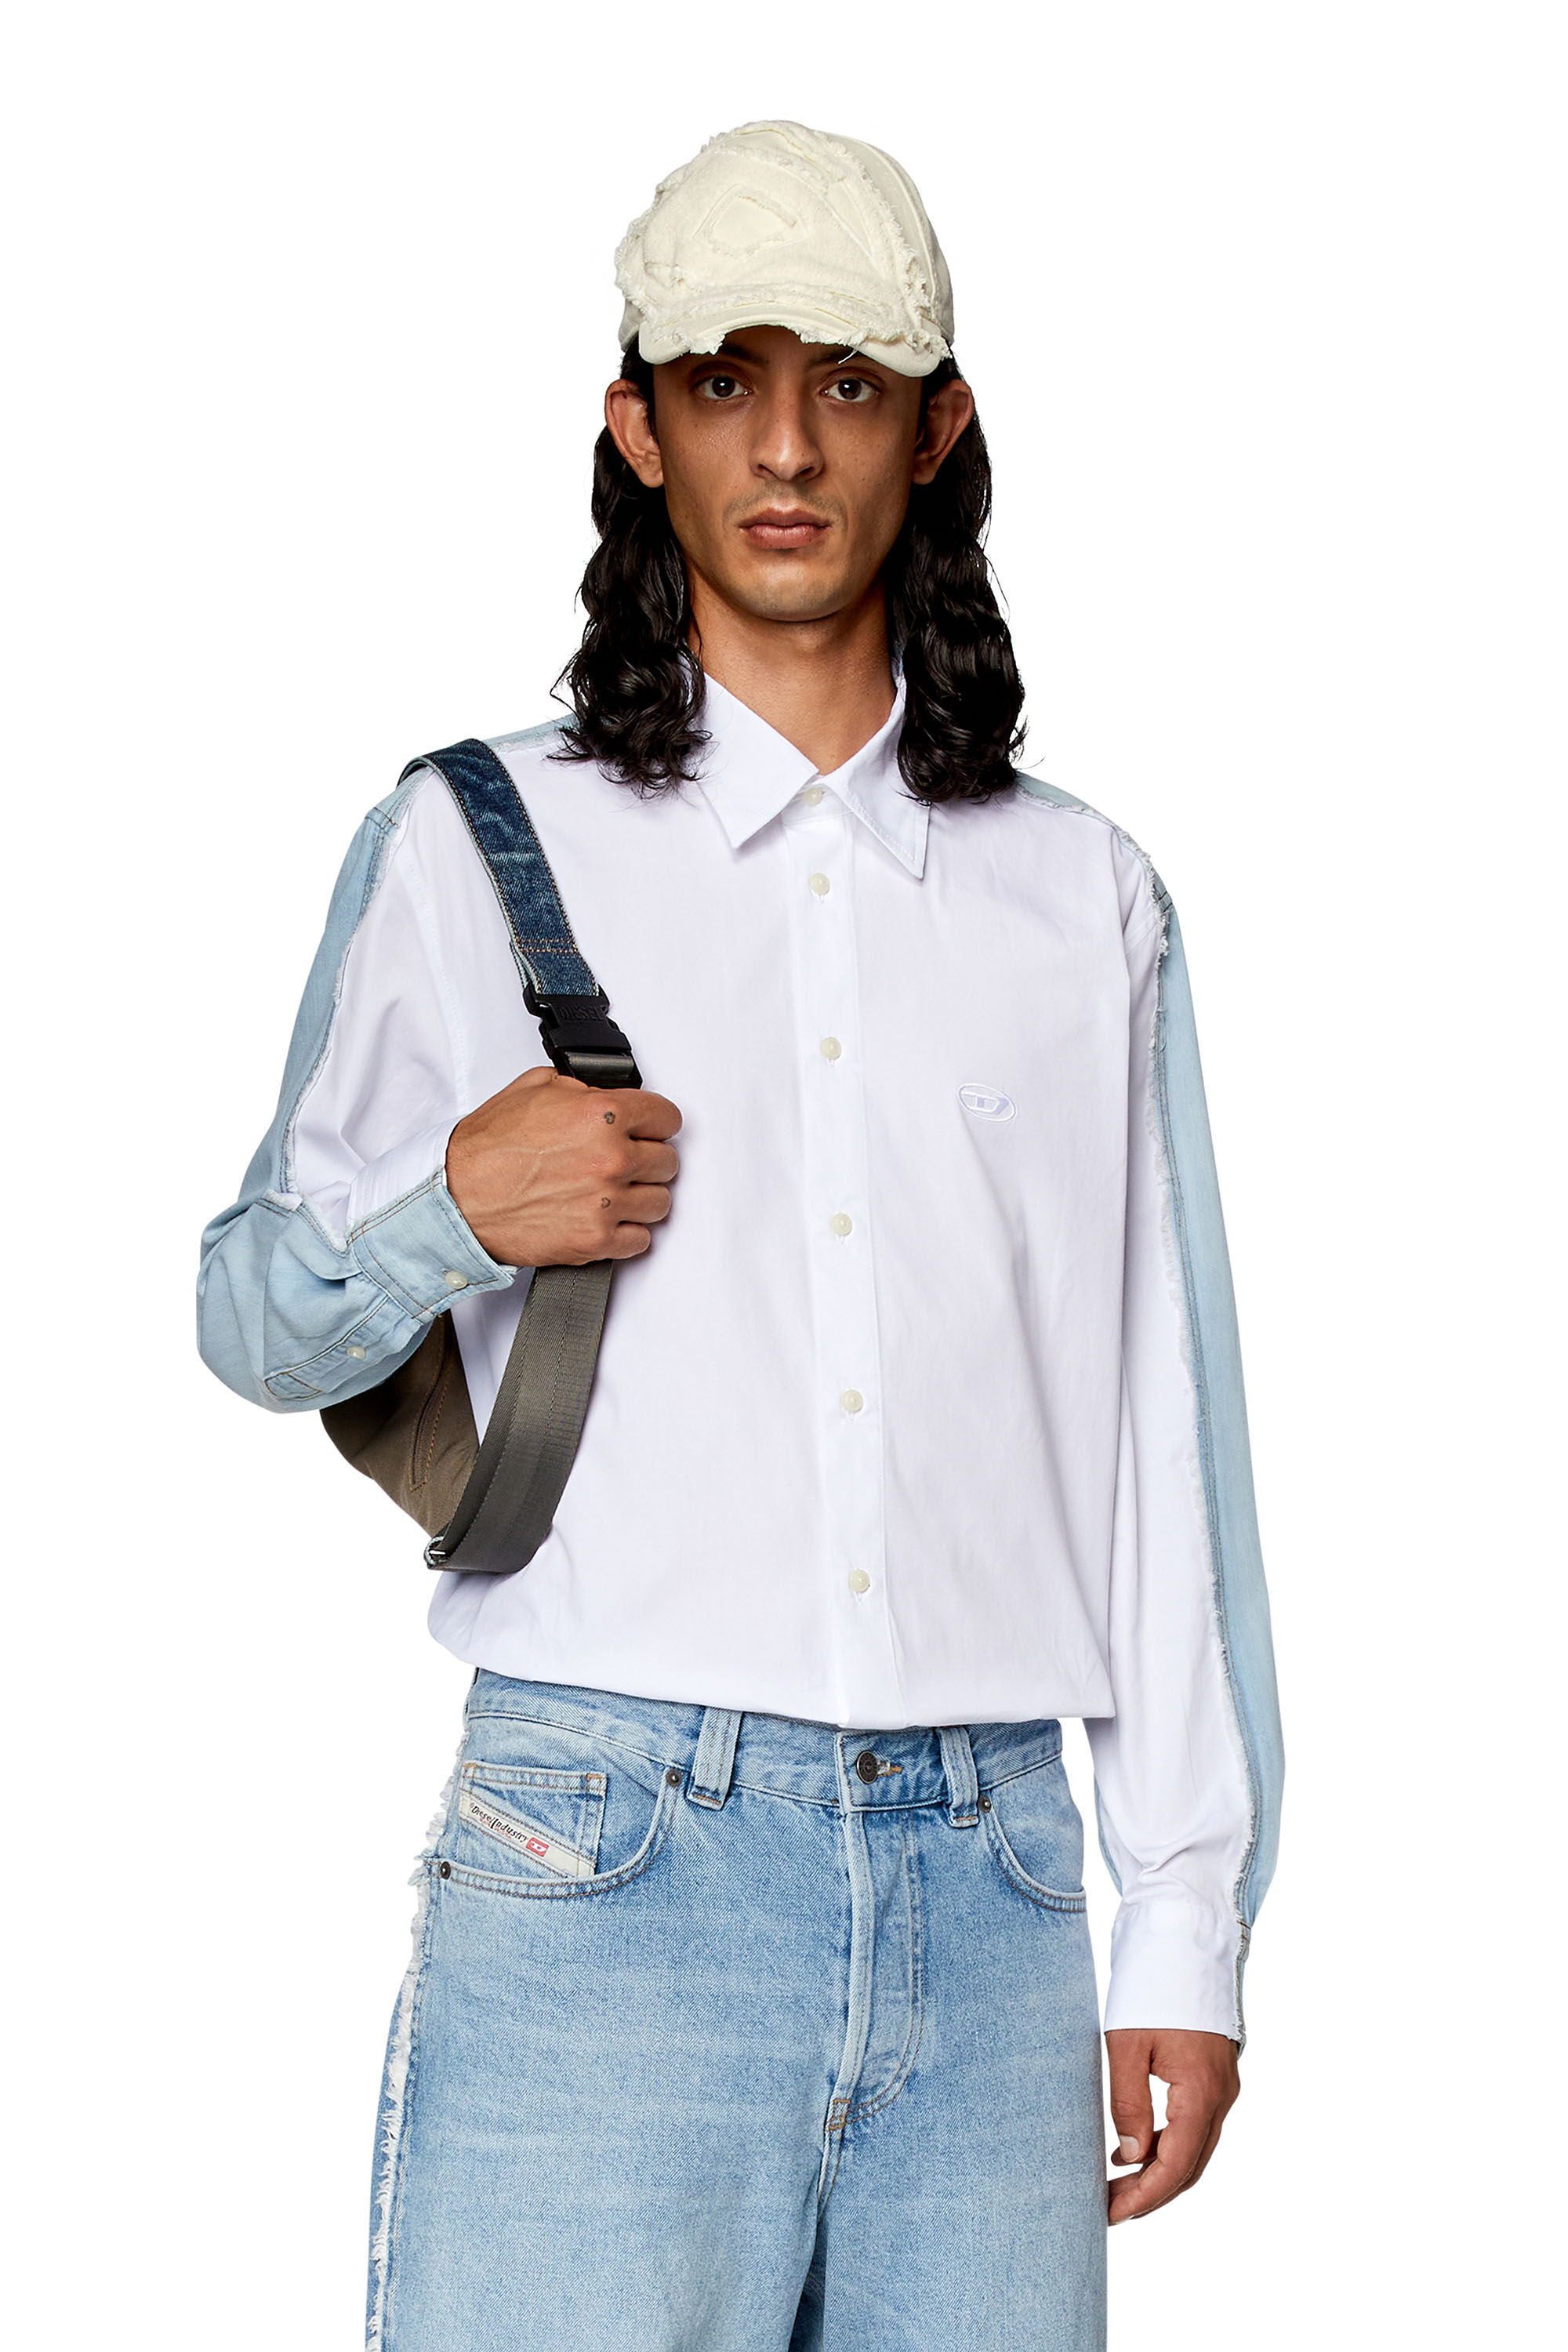 Diesel - S-WARH, Man Shirt in poplin and raw-edge denim in White - Image 3